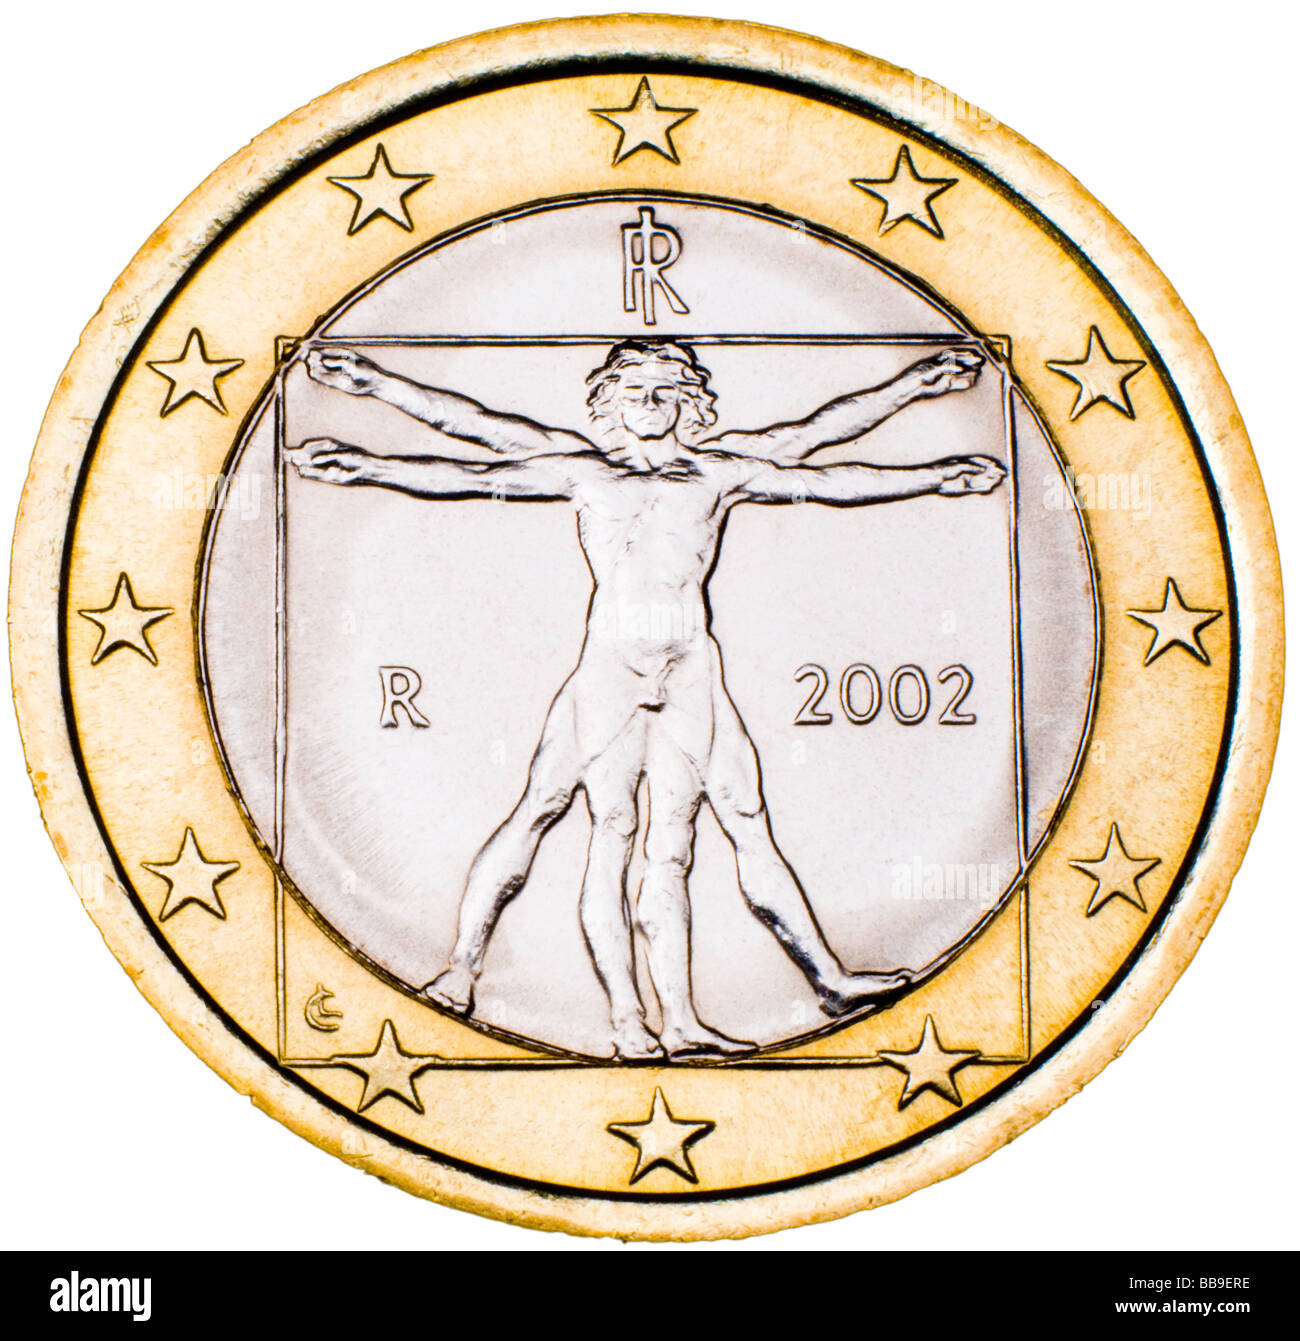 Italia 1 Euro moneta in retromarcia Foto stock - Alamy